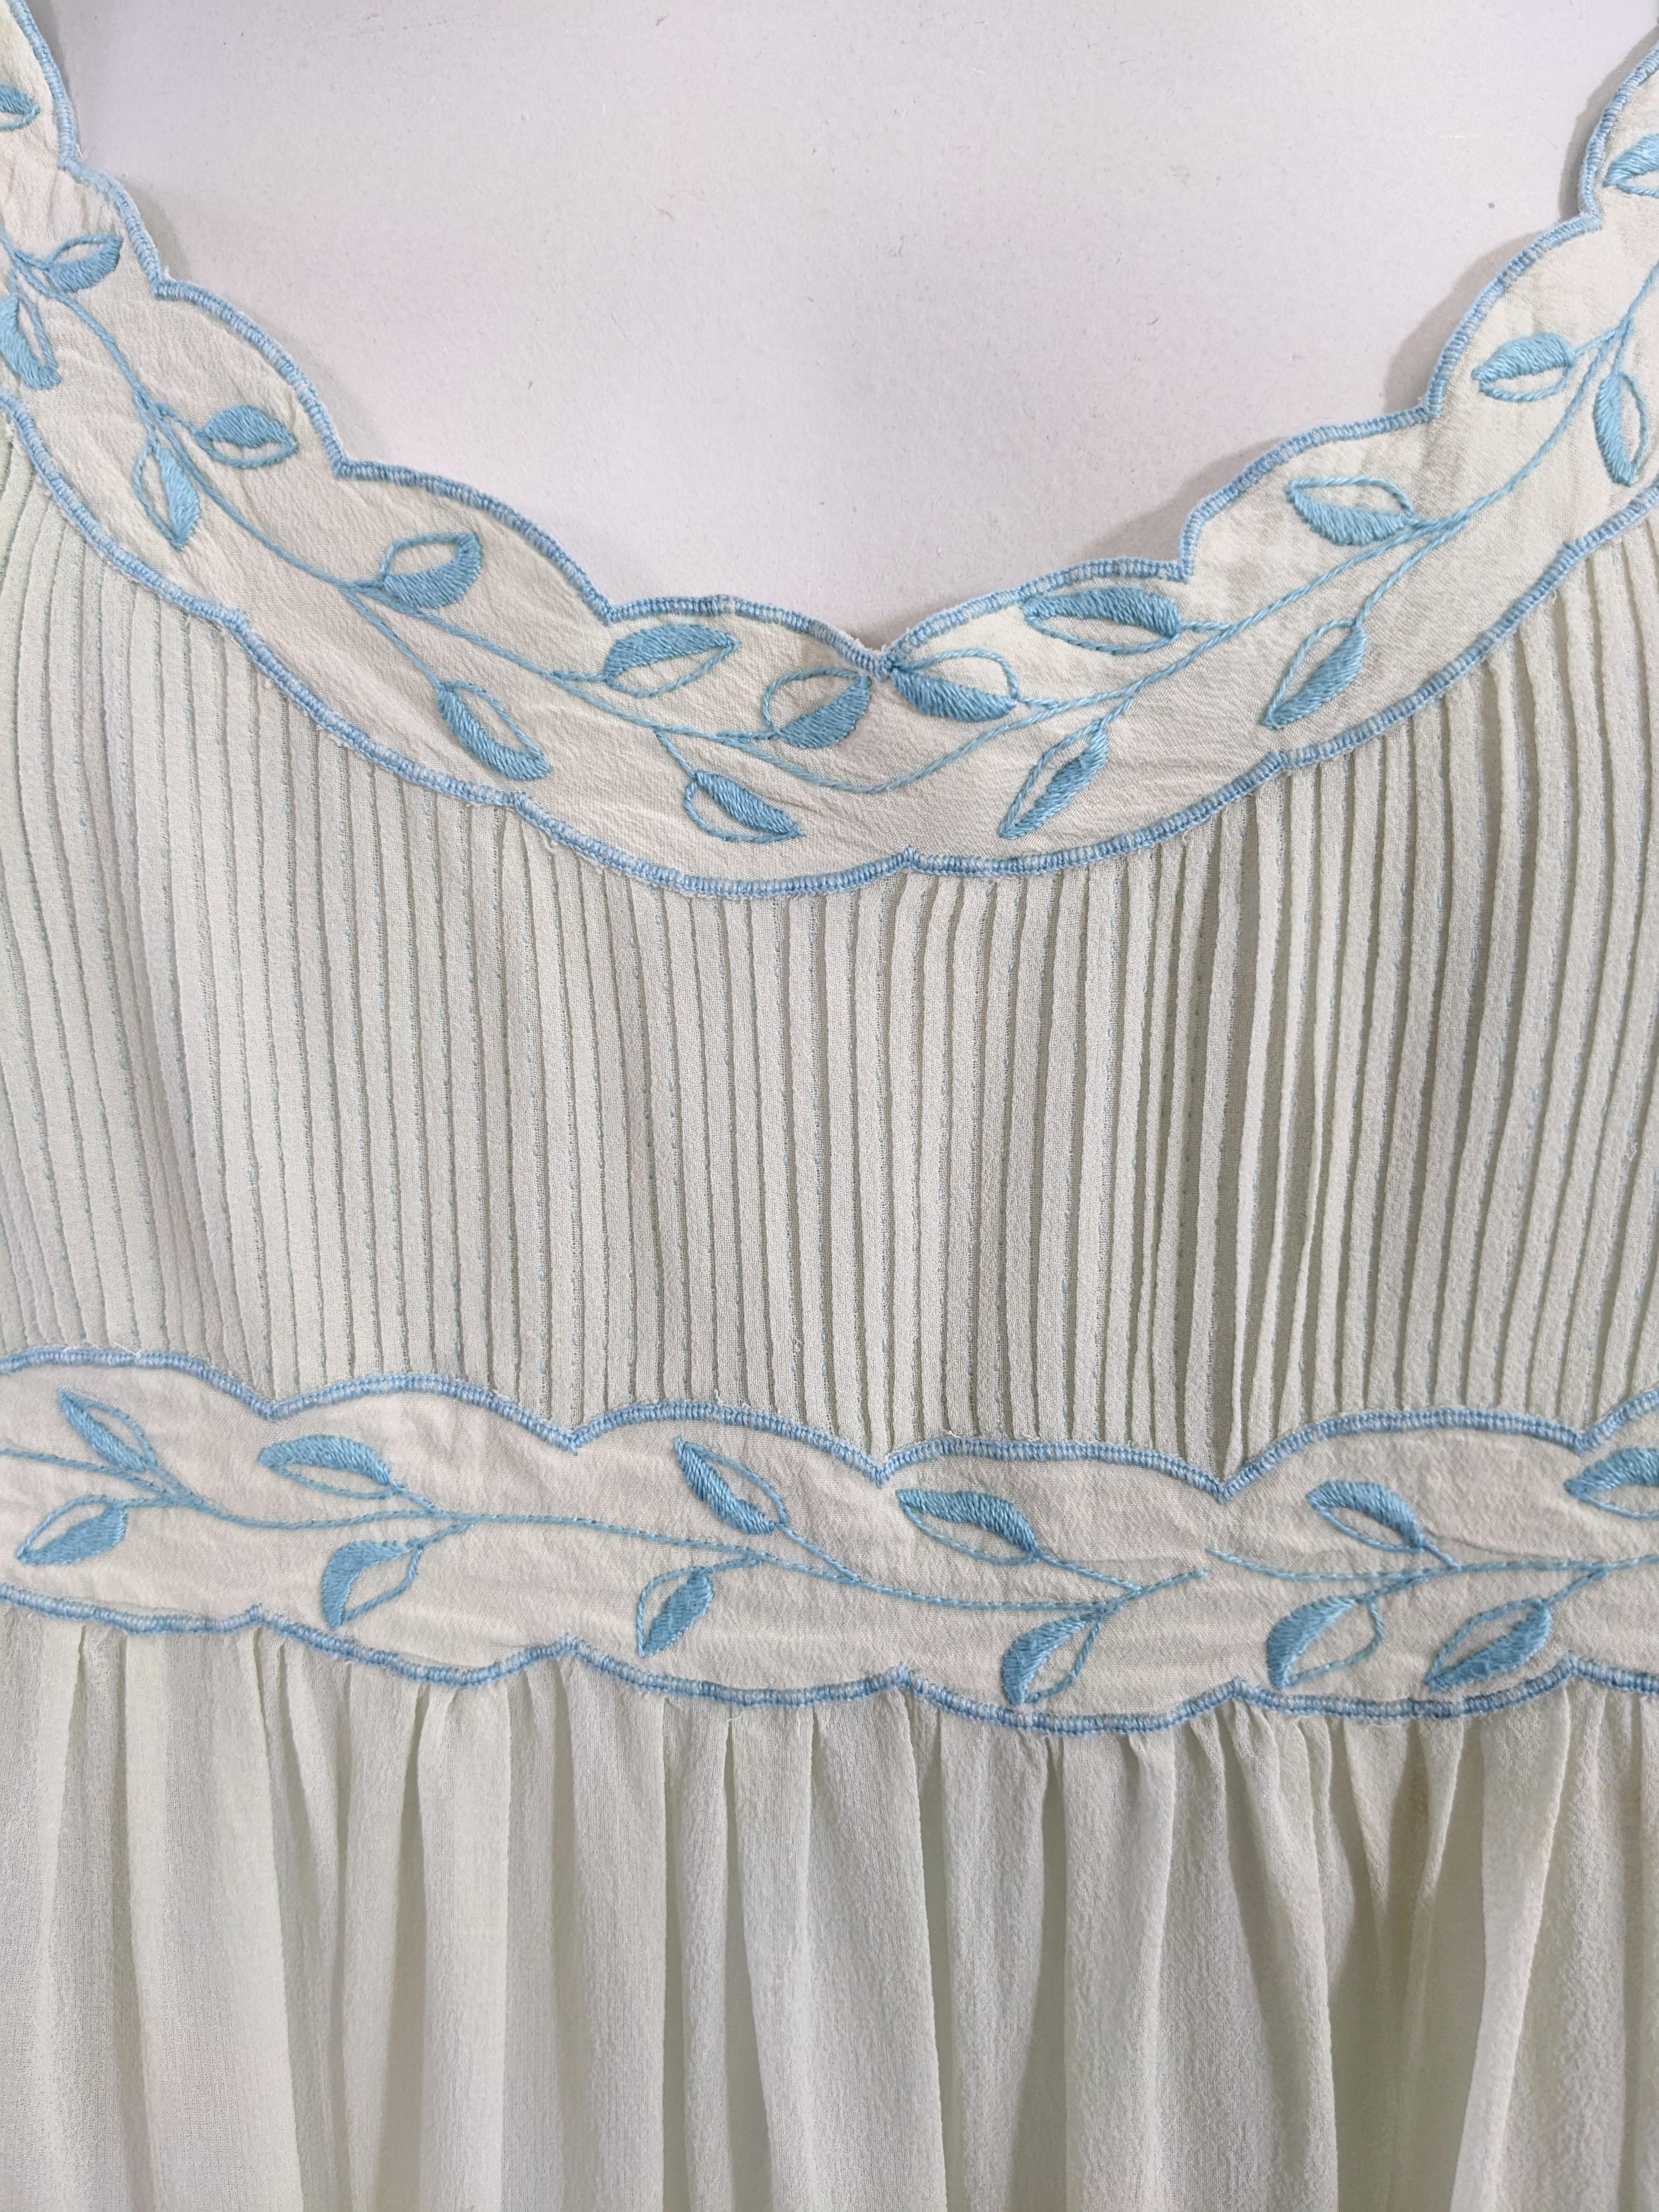 Women's Silk Chiffon Seafoam Slip Dress, Hand Embroidered For Sale